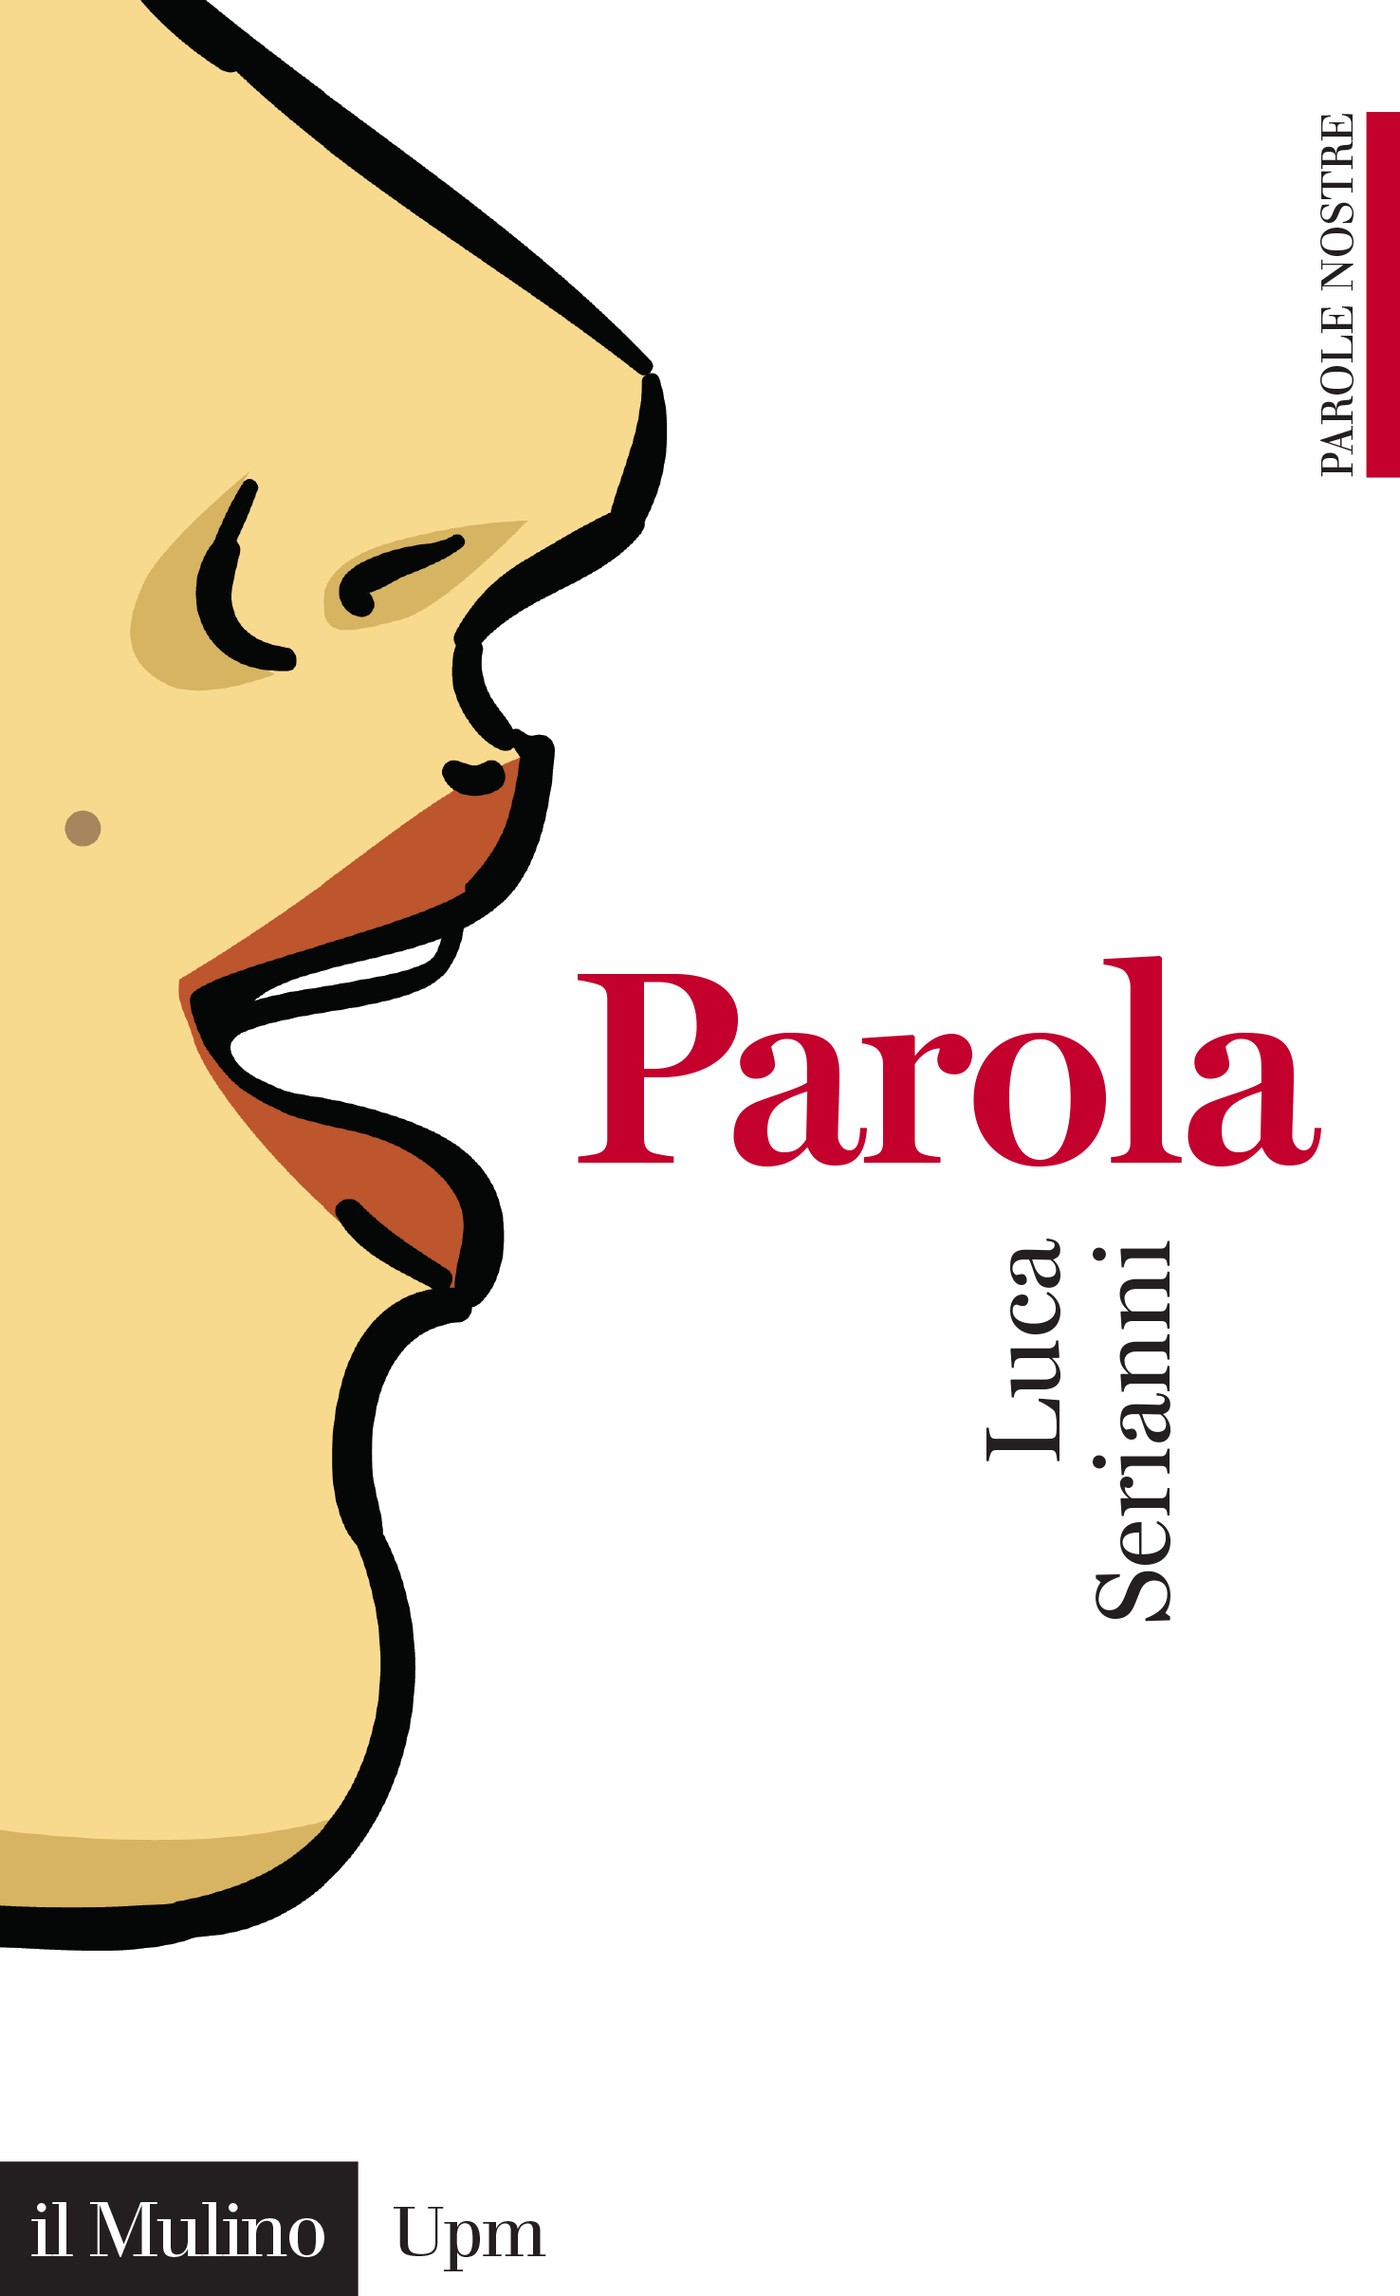 Parola - Librerie.coop